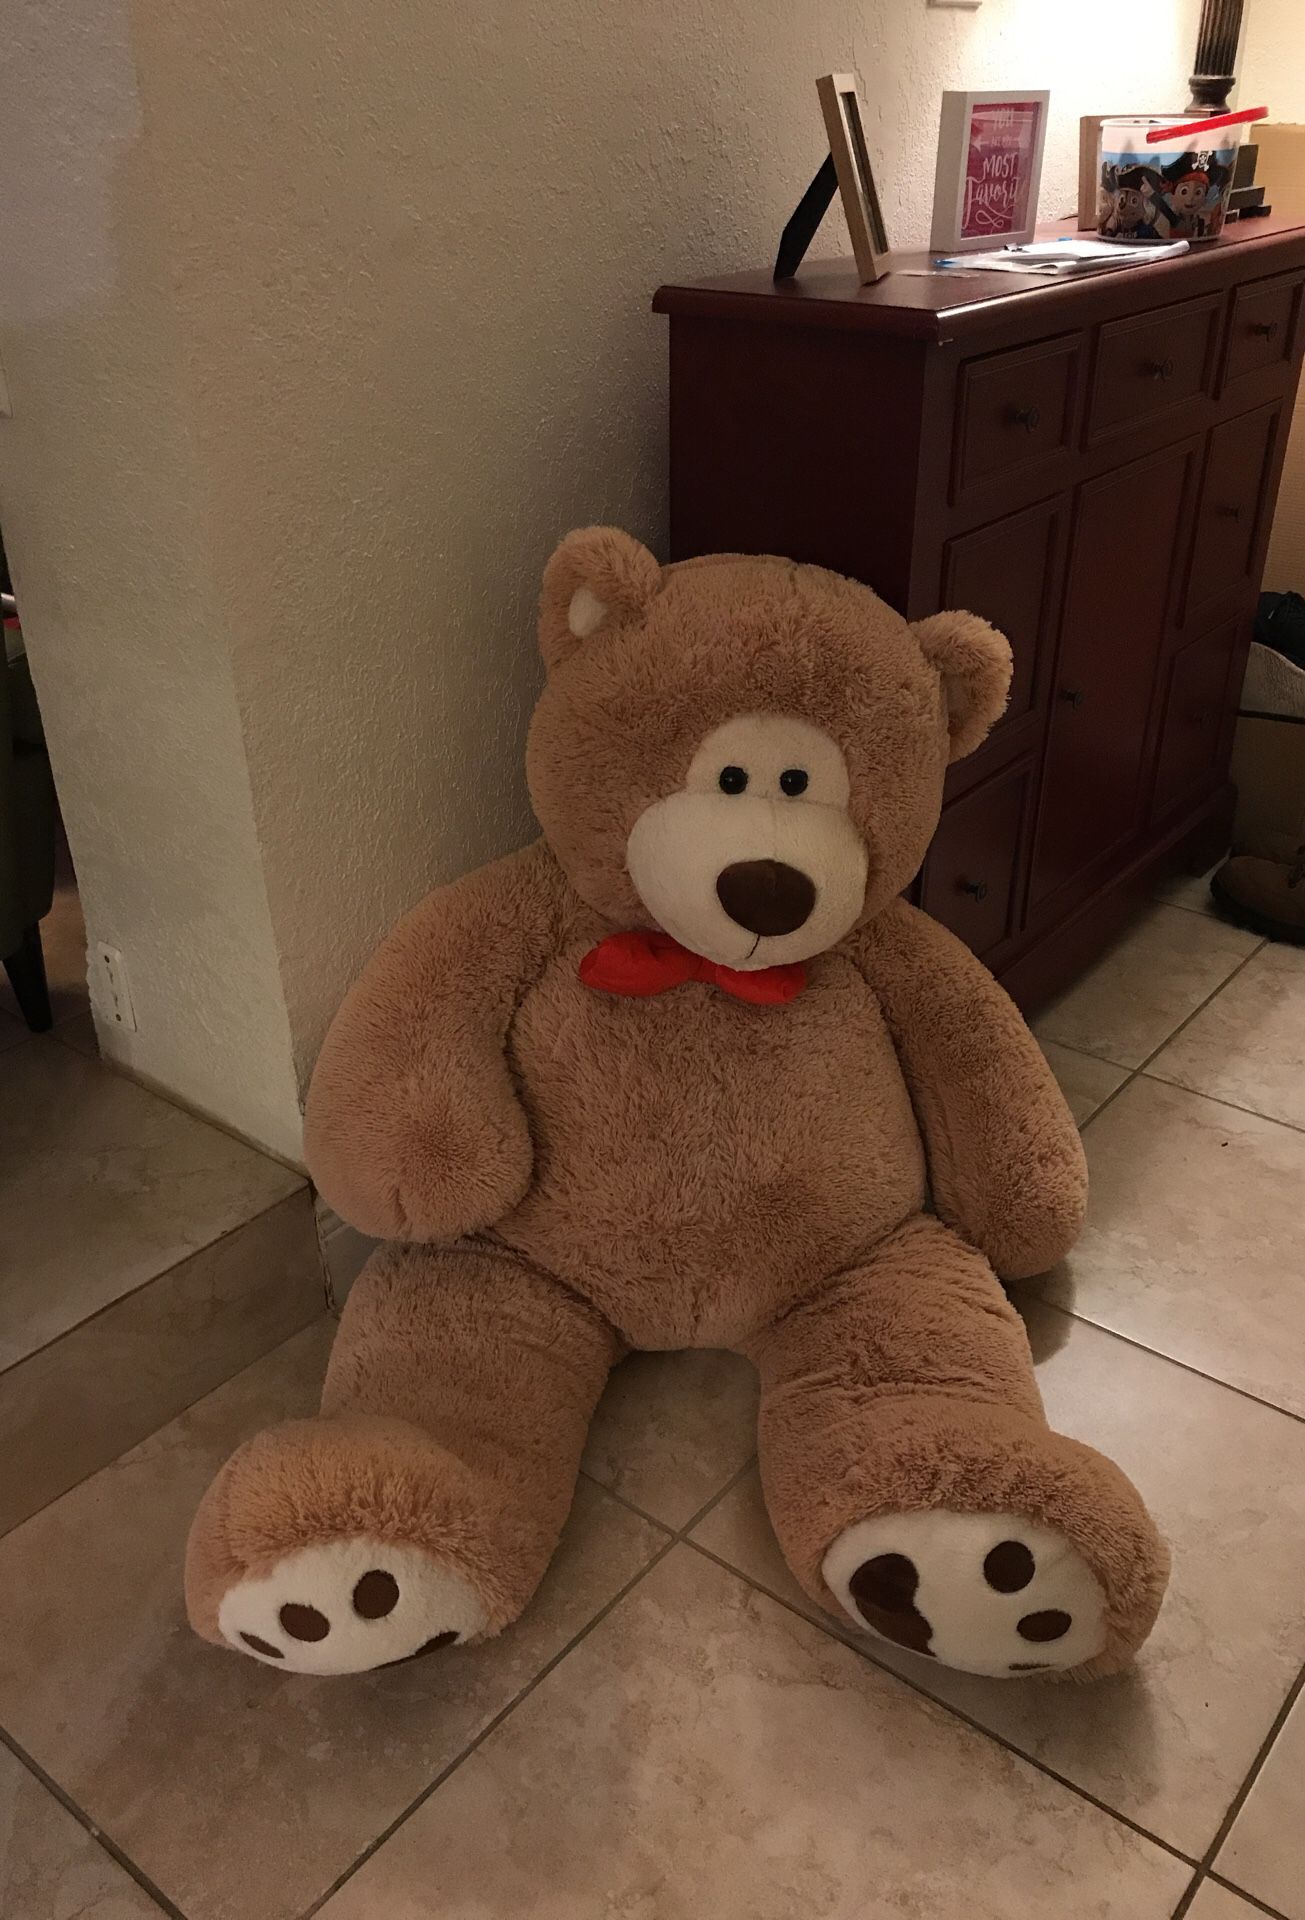 Big Teddy Bear!